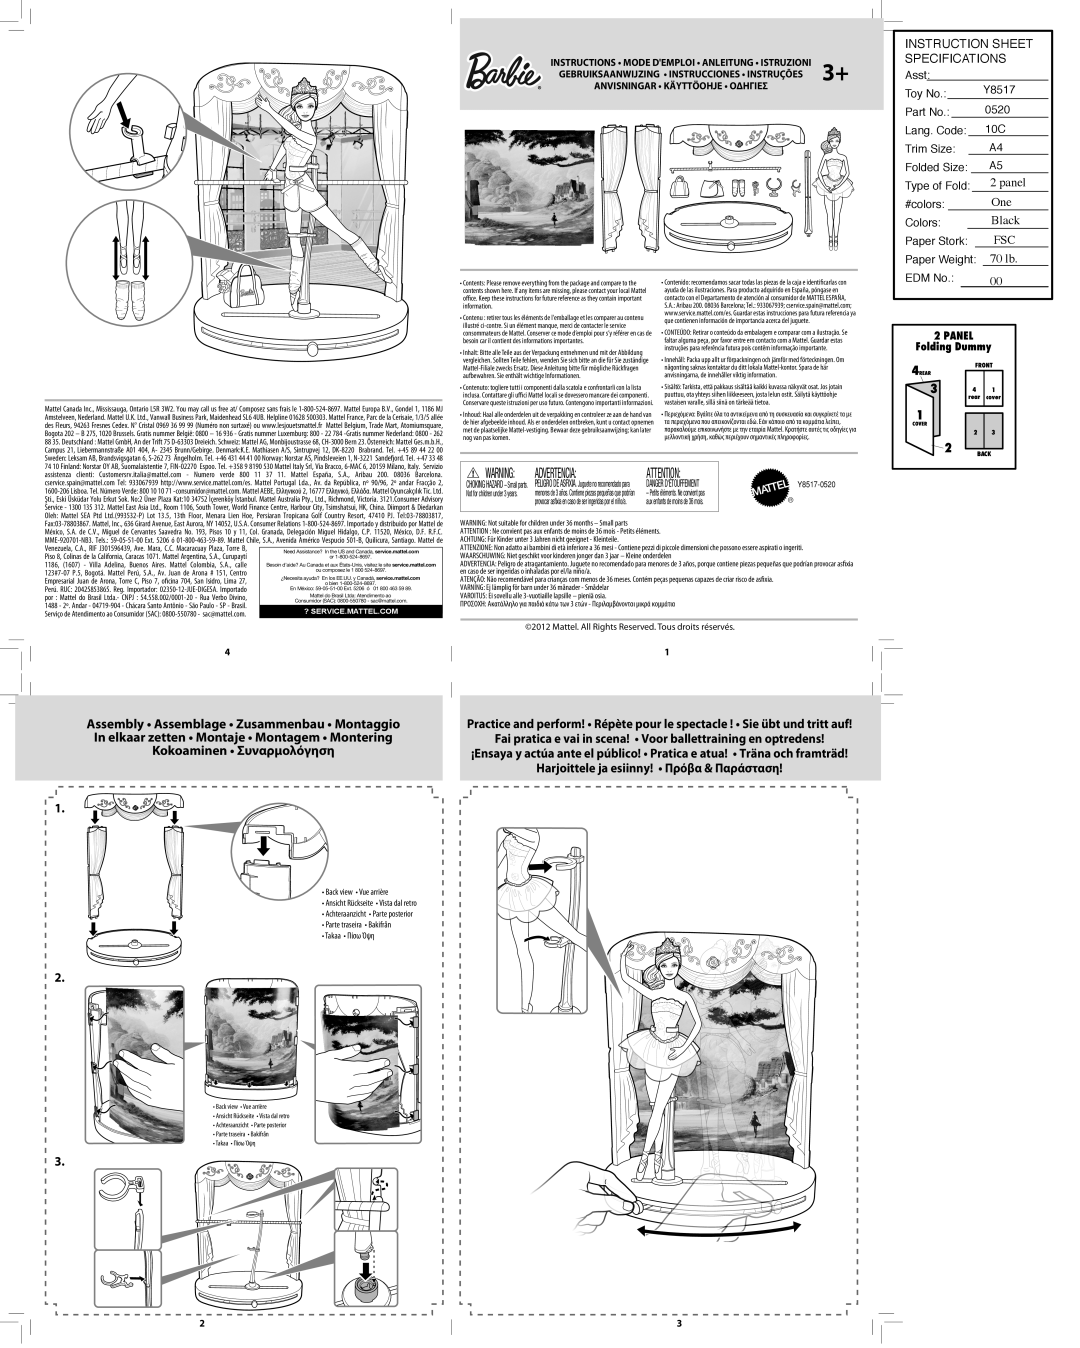 Mattel Y8517 instruction sheet Advertencia, Instruction Sheet Specifications, Fsc 